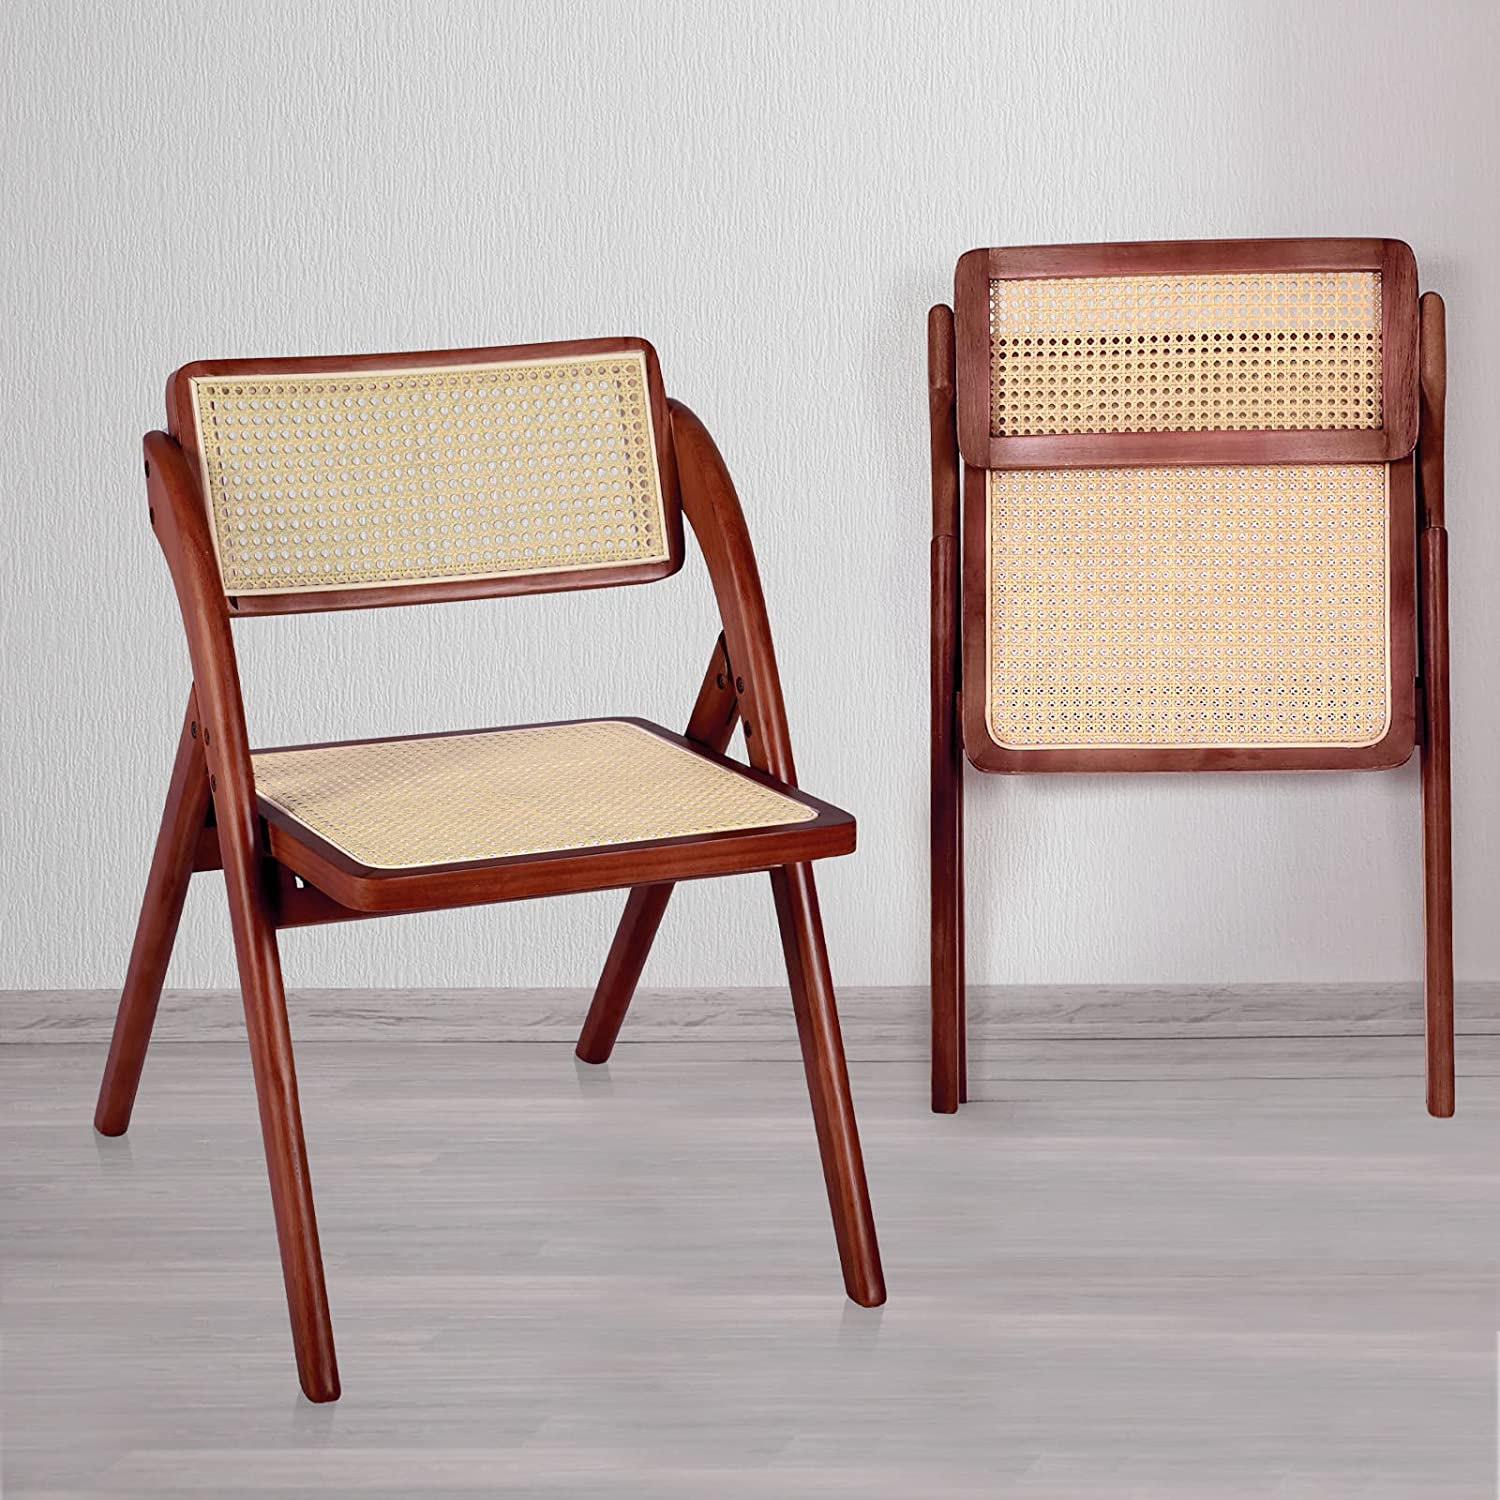 Charming And Beautiful Folding Garden Chairs